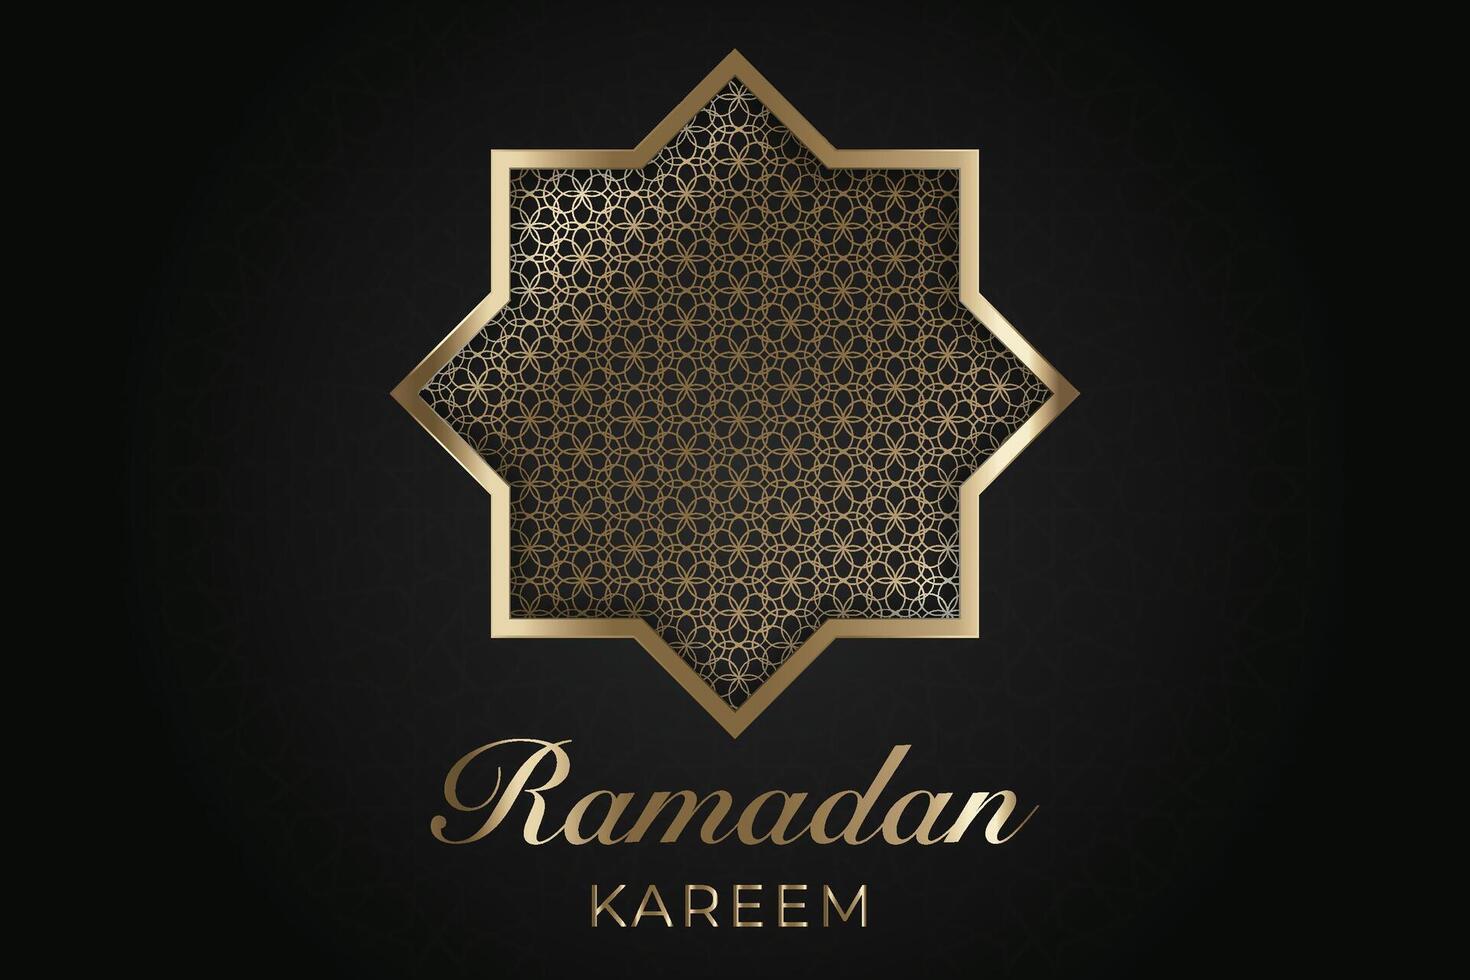 elegant lyx ramadhan, eid mubarak dekorativ Semester kort vektor